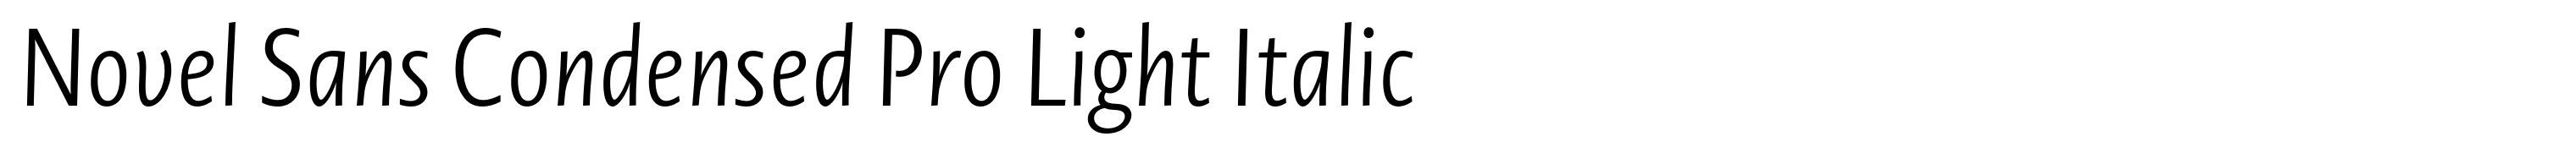 Novel Sans Condensed Pro Light Italic